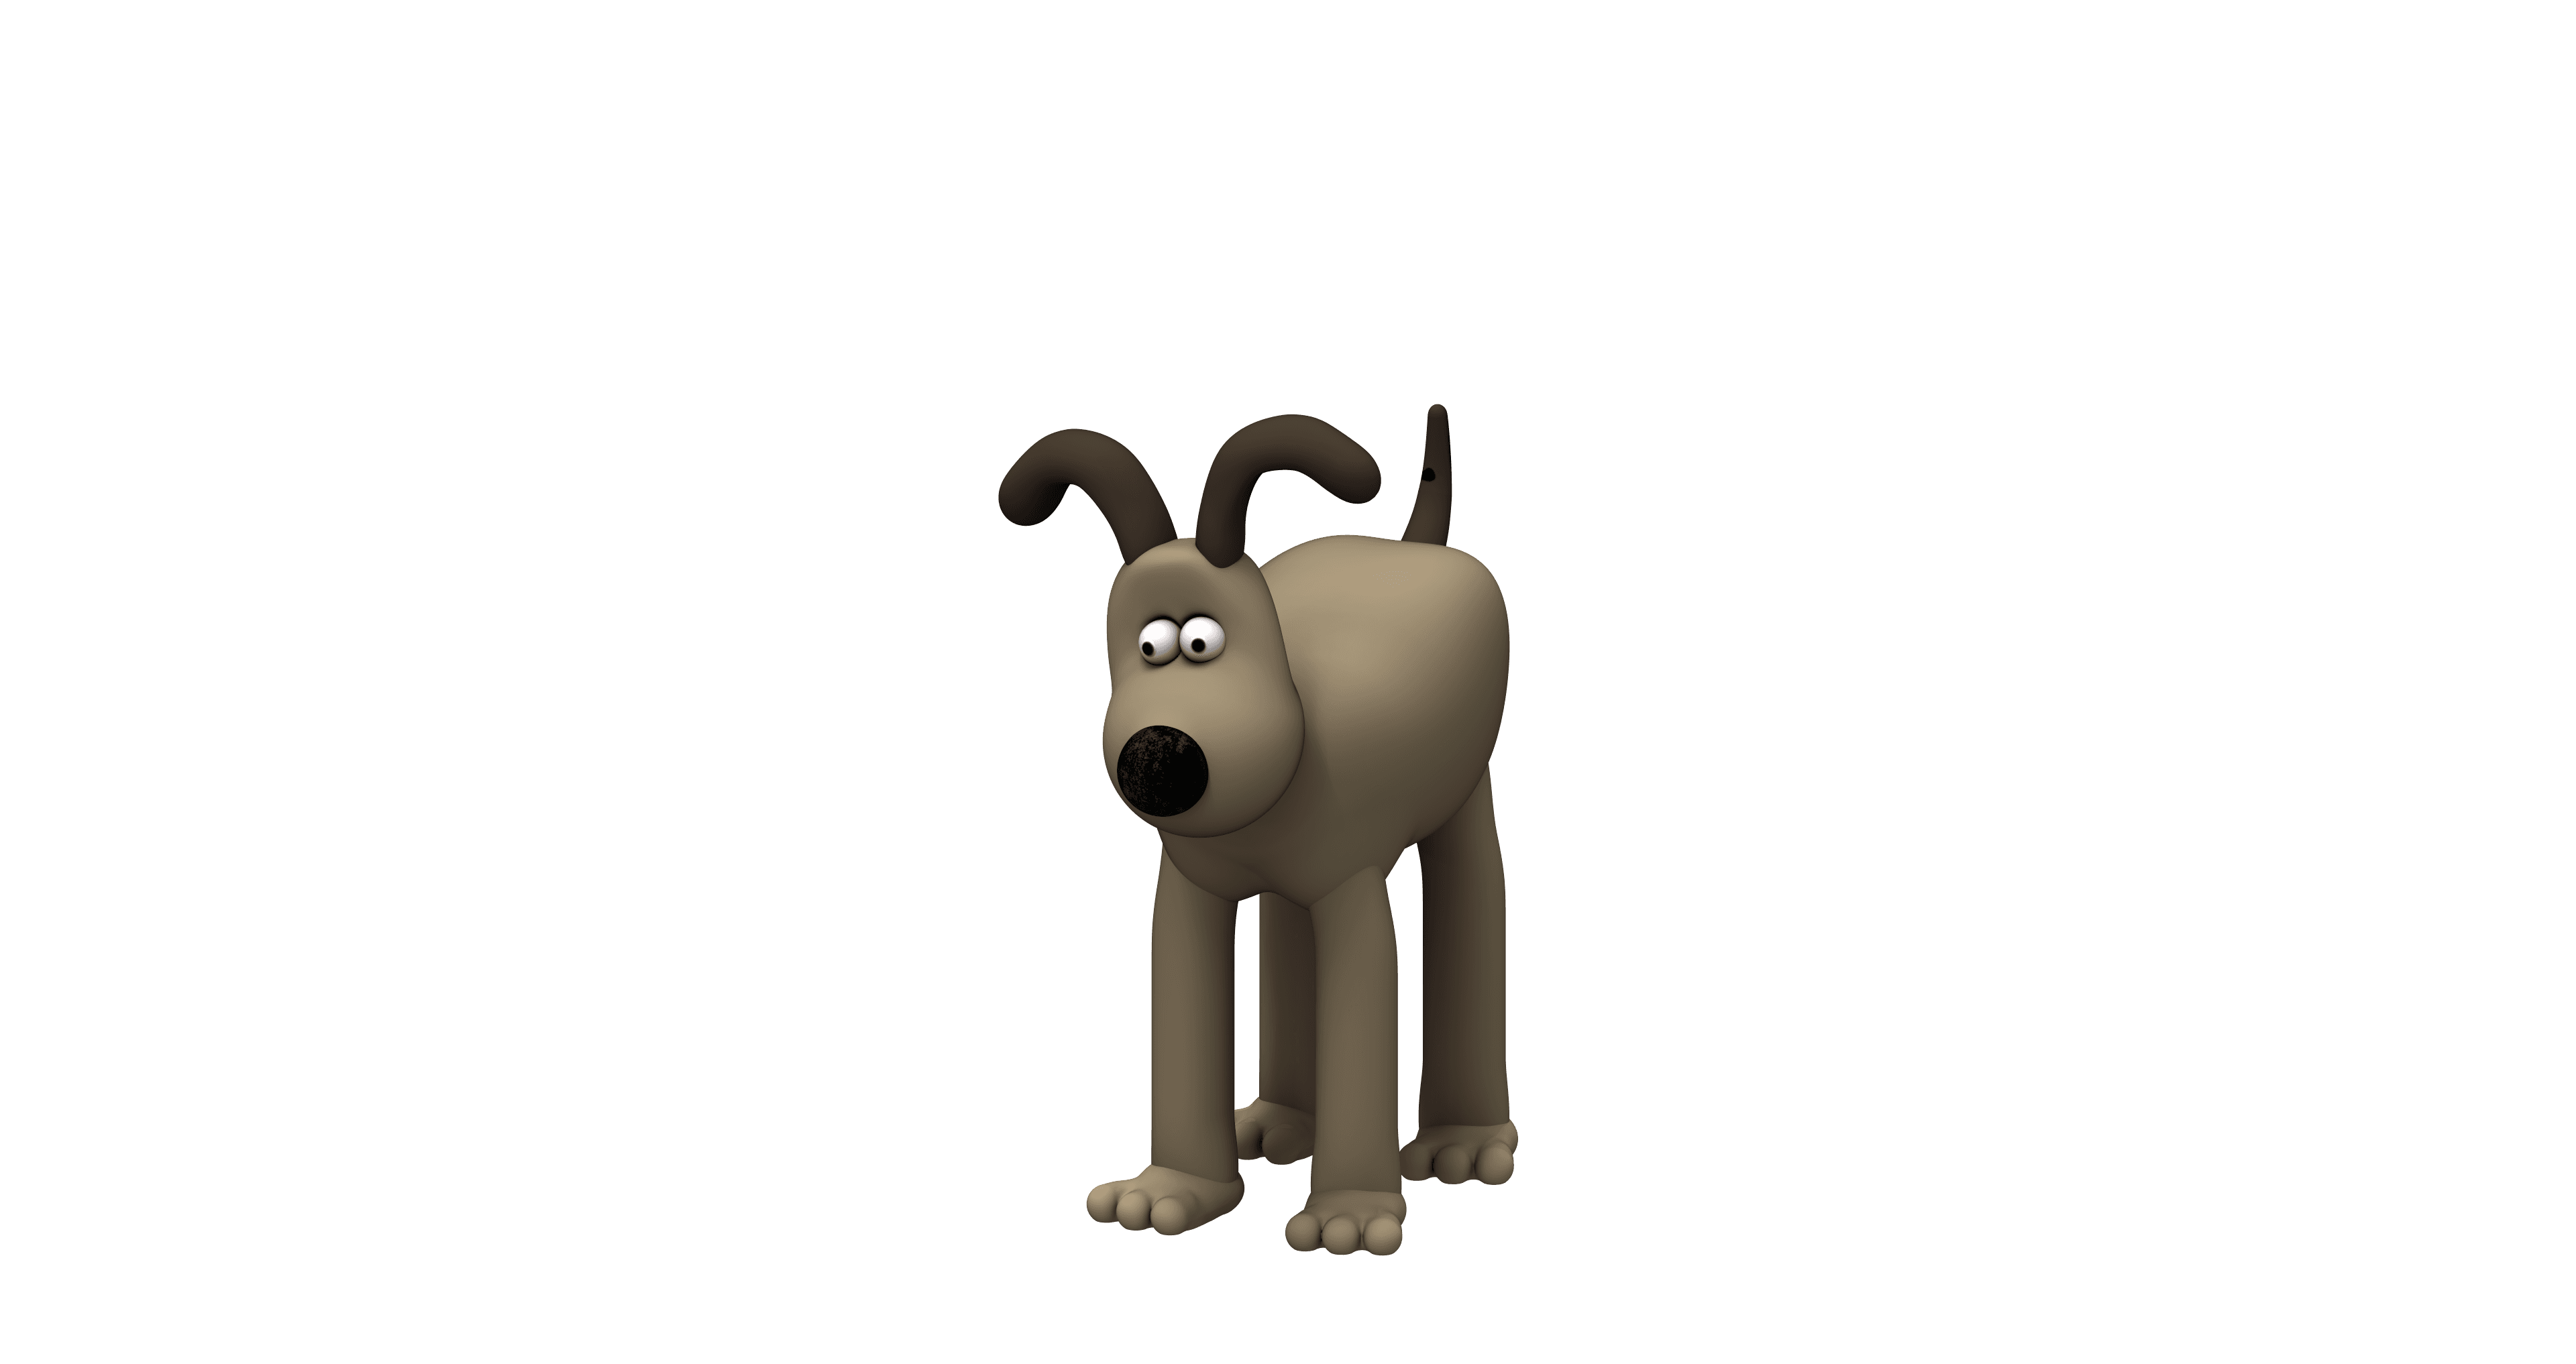 Wallace and Gromit - Gromit sculpt 3d model